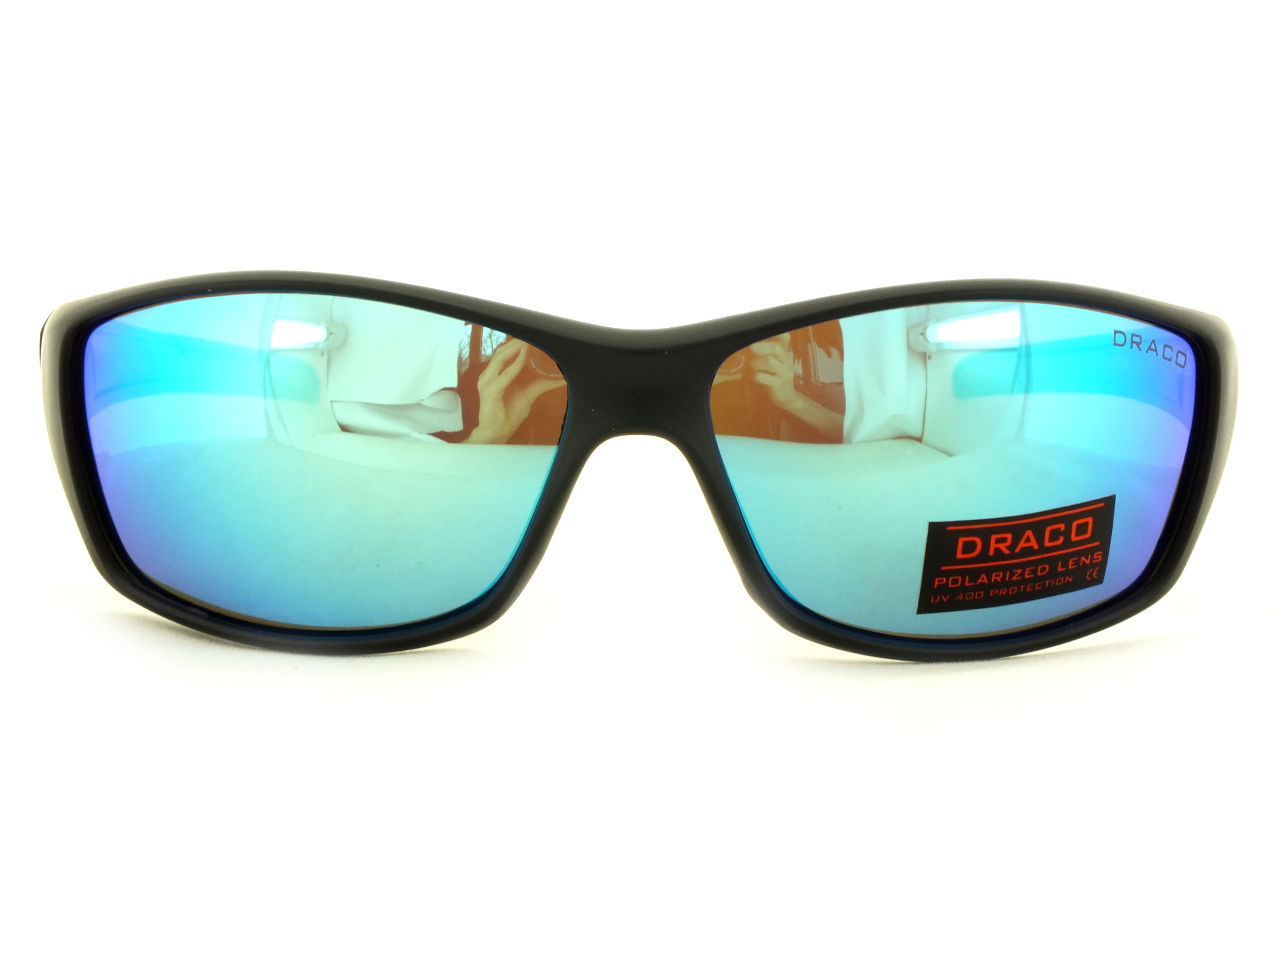 retina display polarized sunglasses